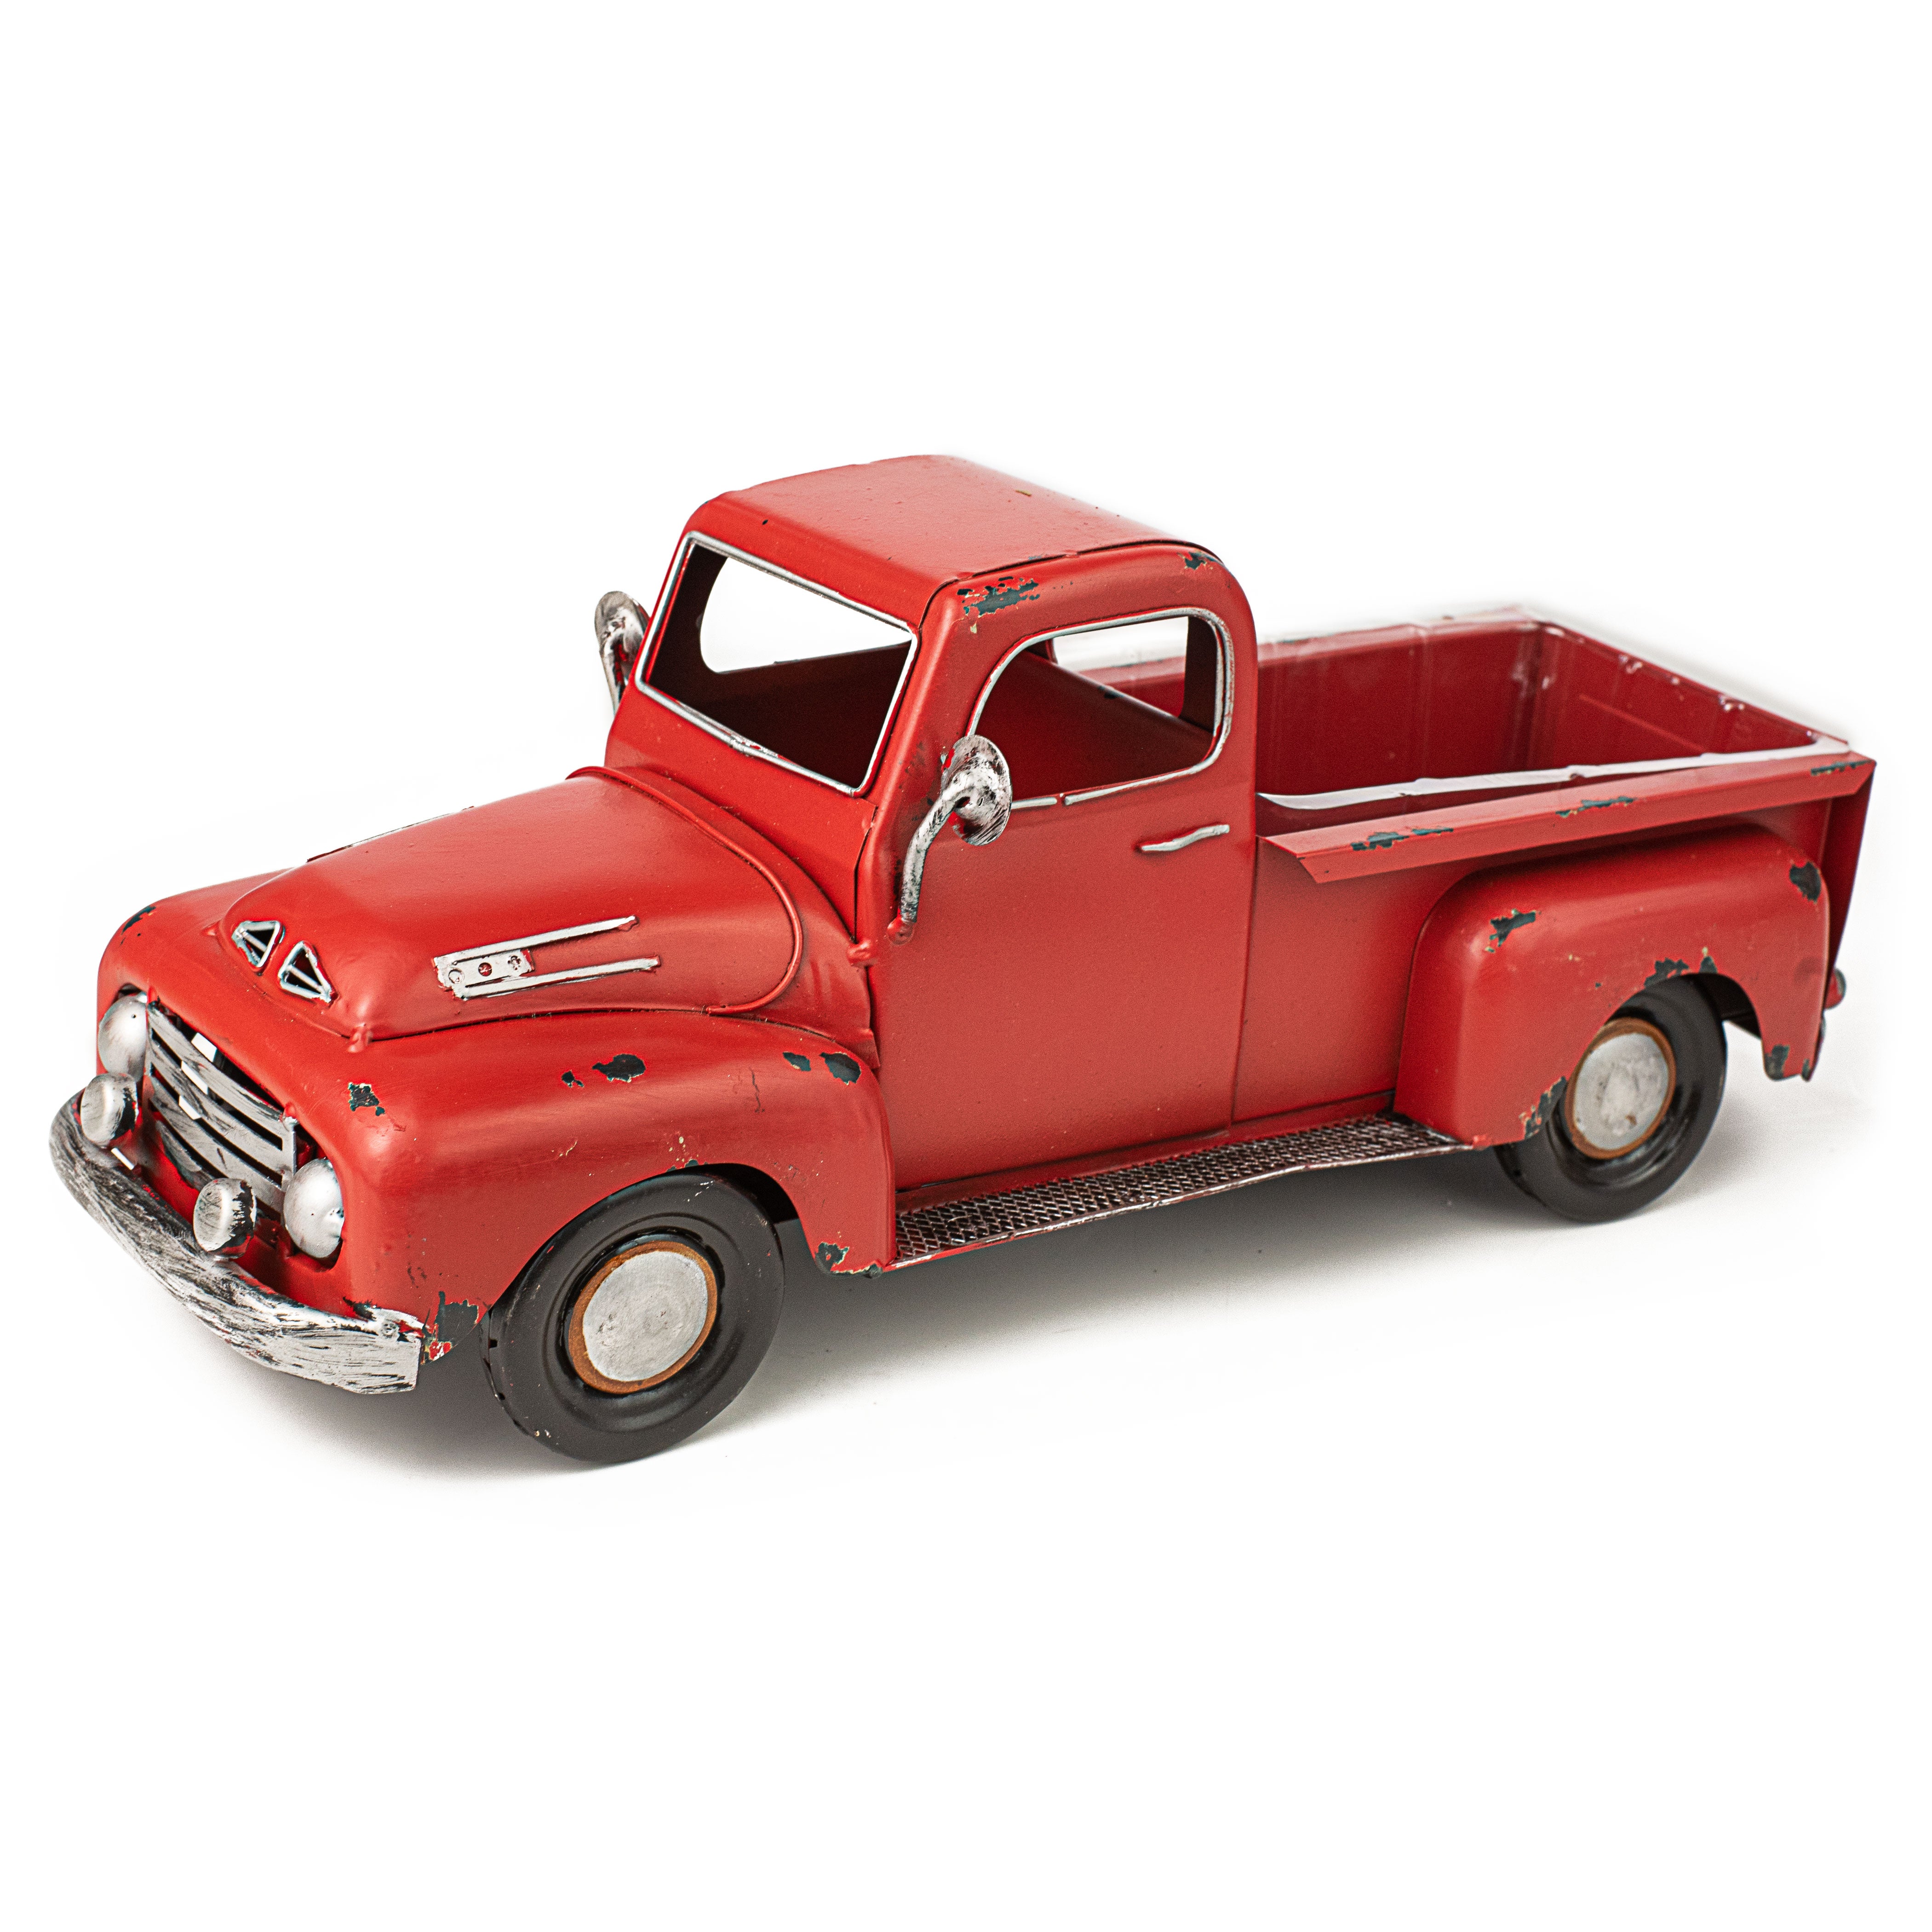 16" Vintage Truck Planter: Red